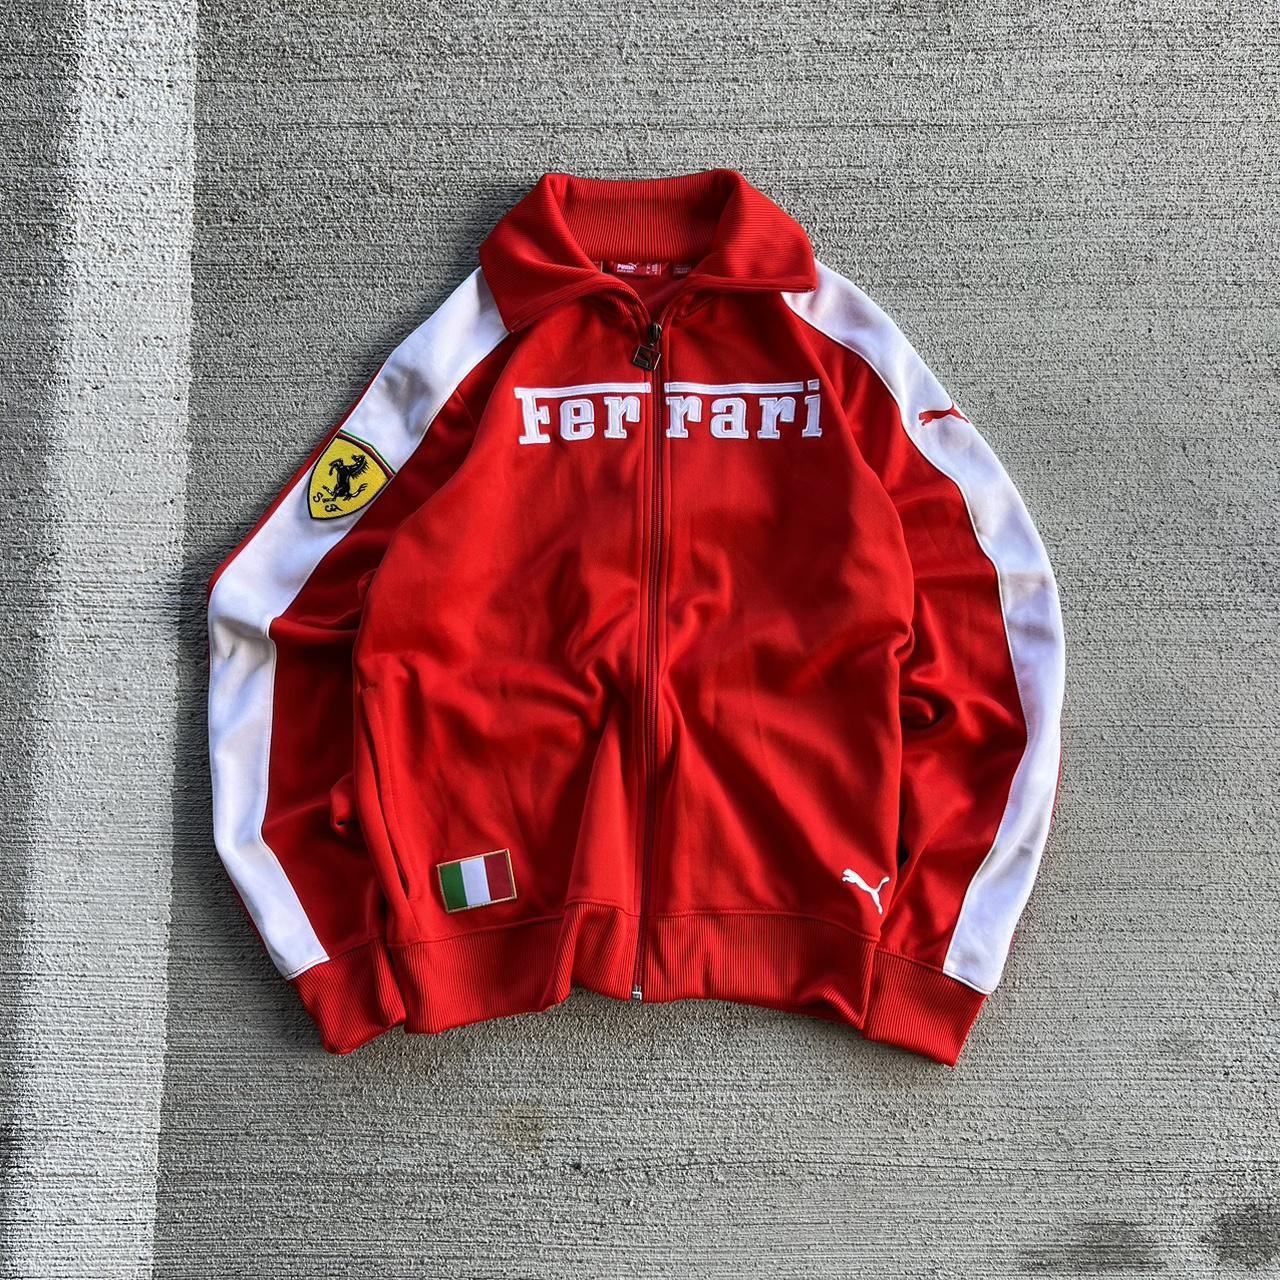 Ferrari Men's Red and White Jacket (2)